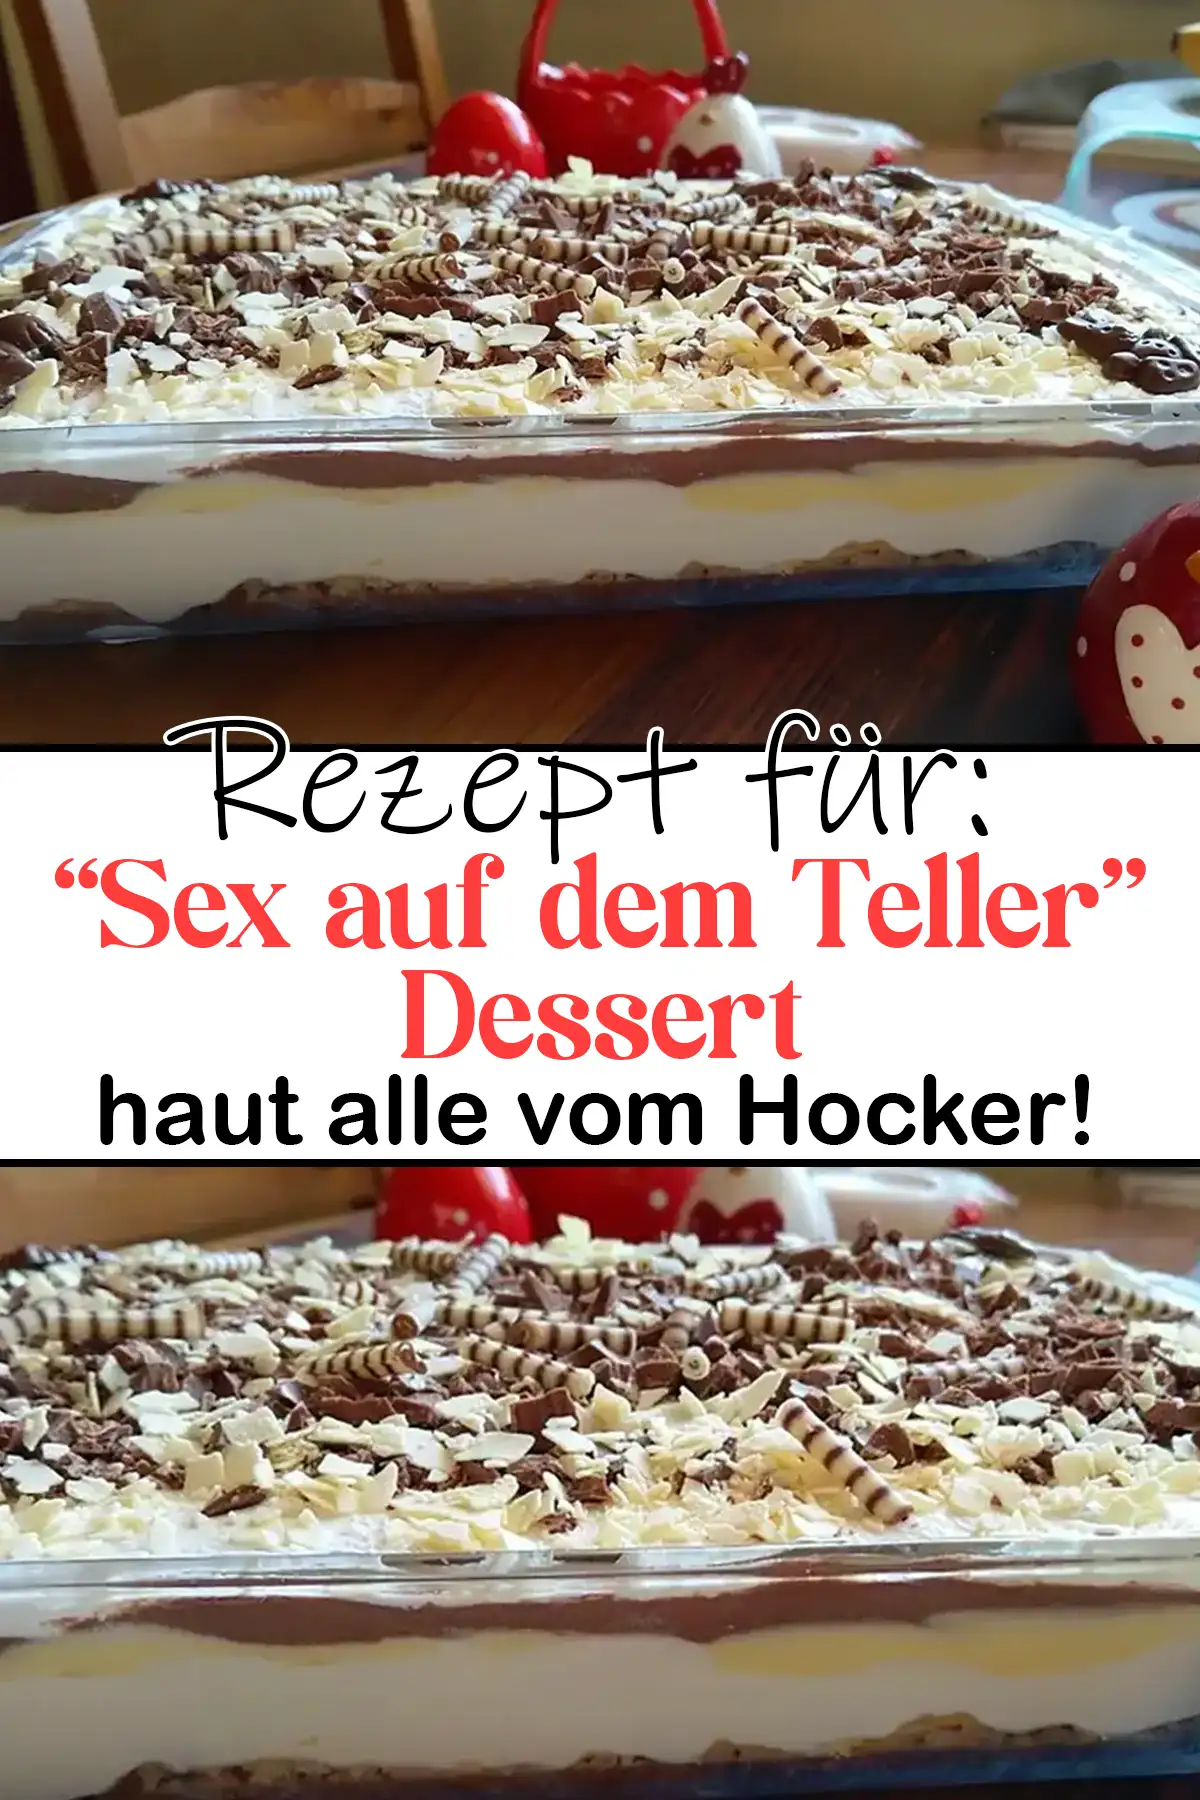 “Sex auf dem Teller” Dessert Rezept, haut alle vom Hocker!